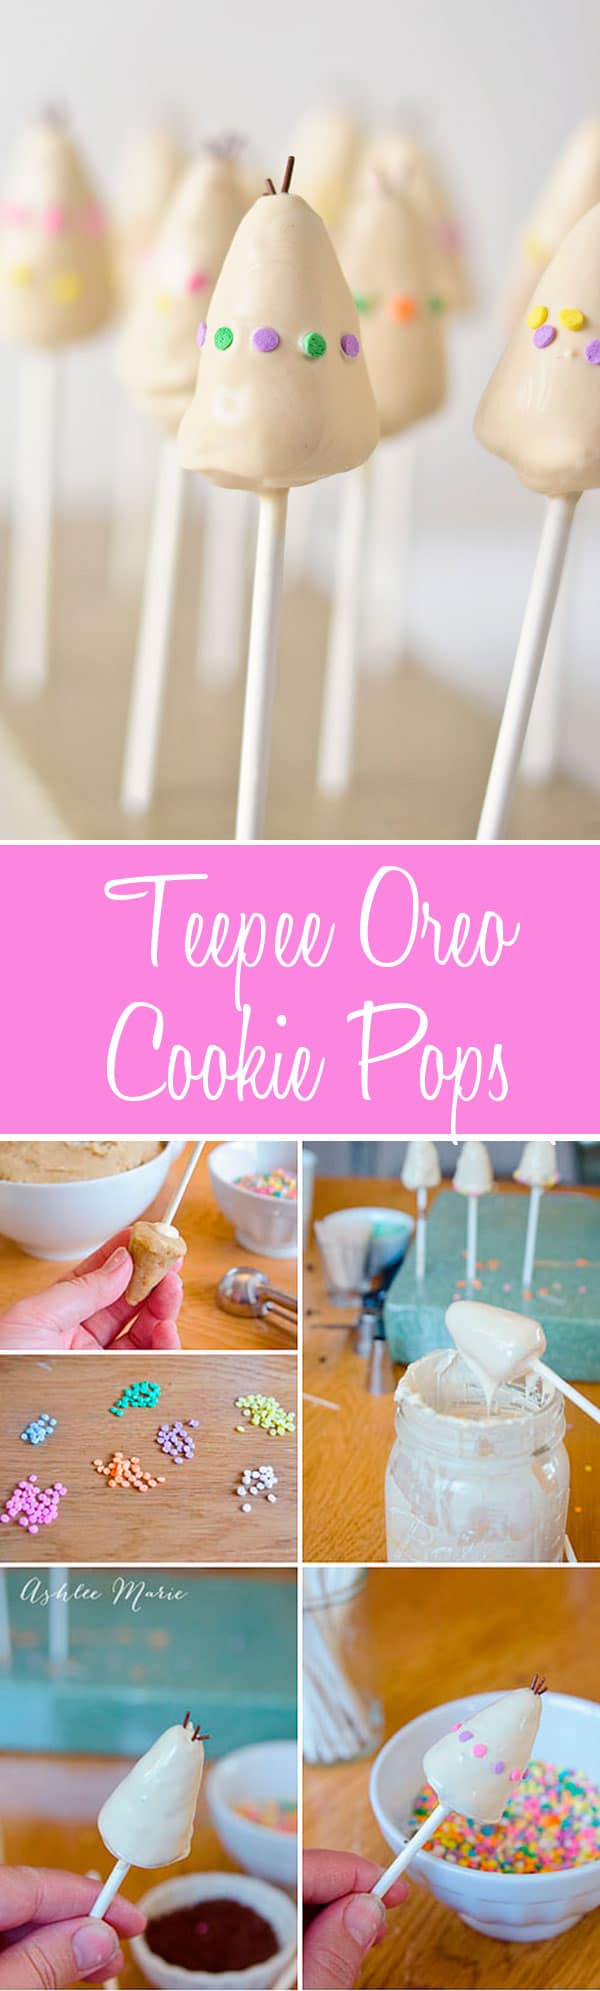 teepee shaped OREO cookie pops tutorial